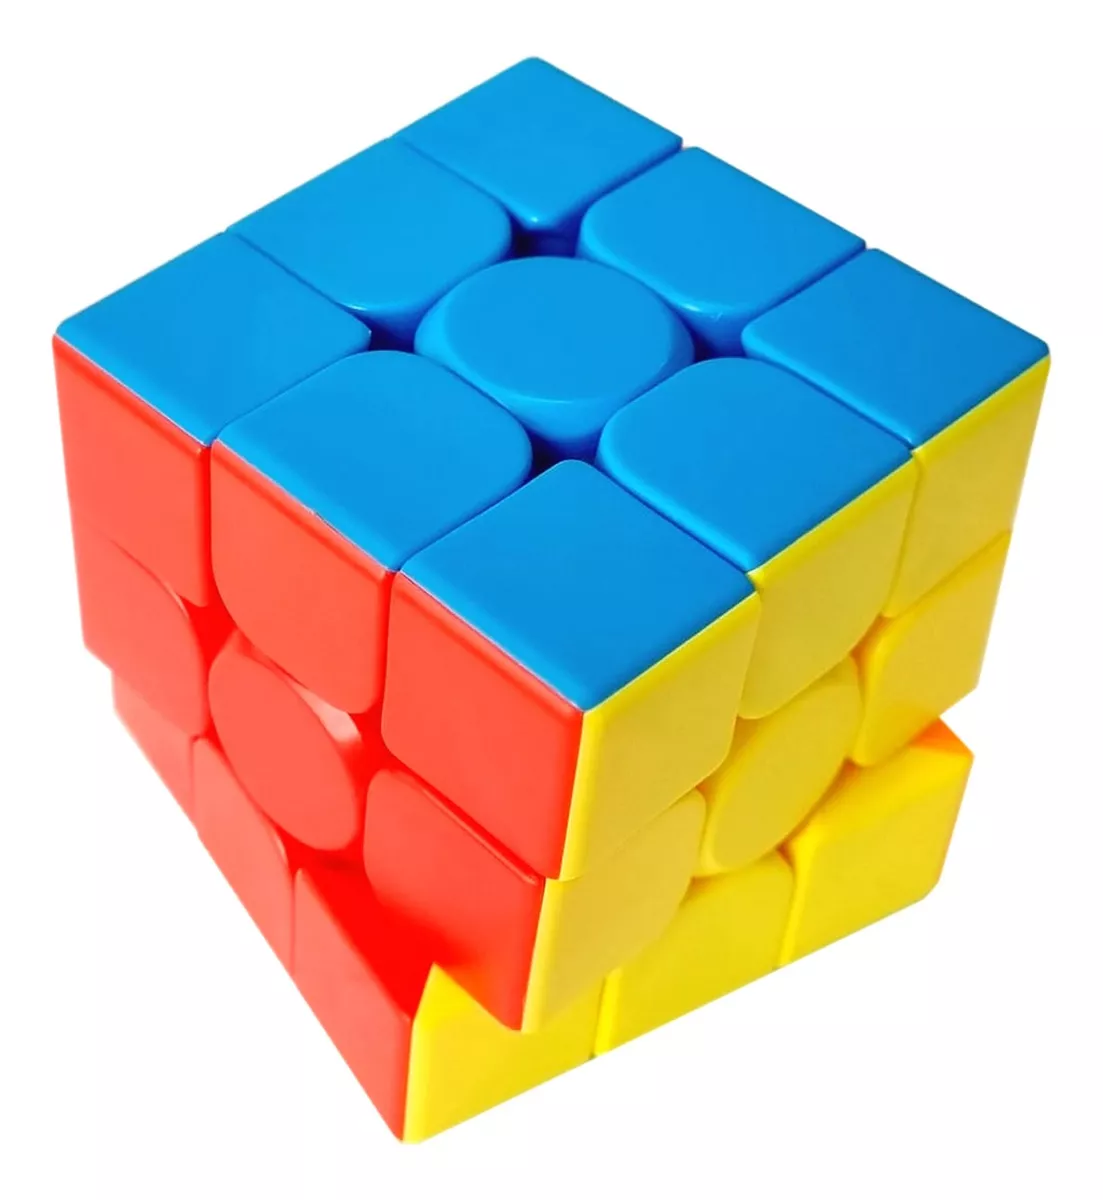 Cubo Mágico 3x3x3 Profissional Clássico Original Anti-risco